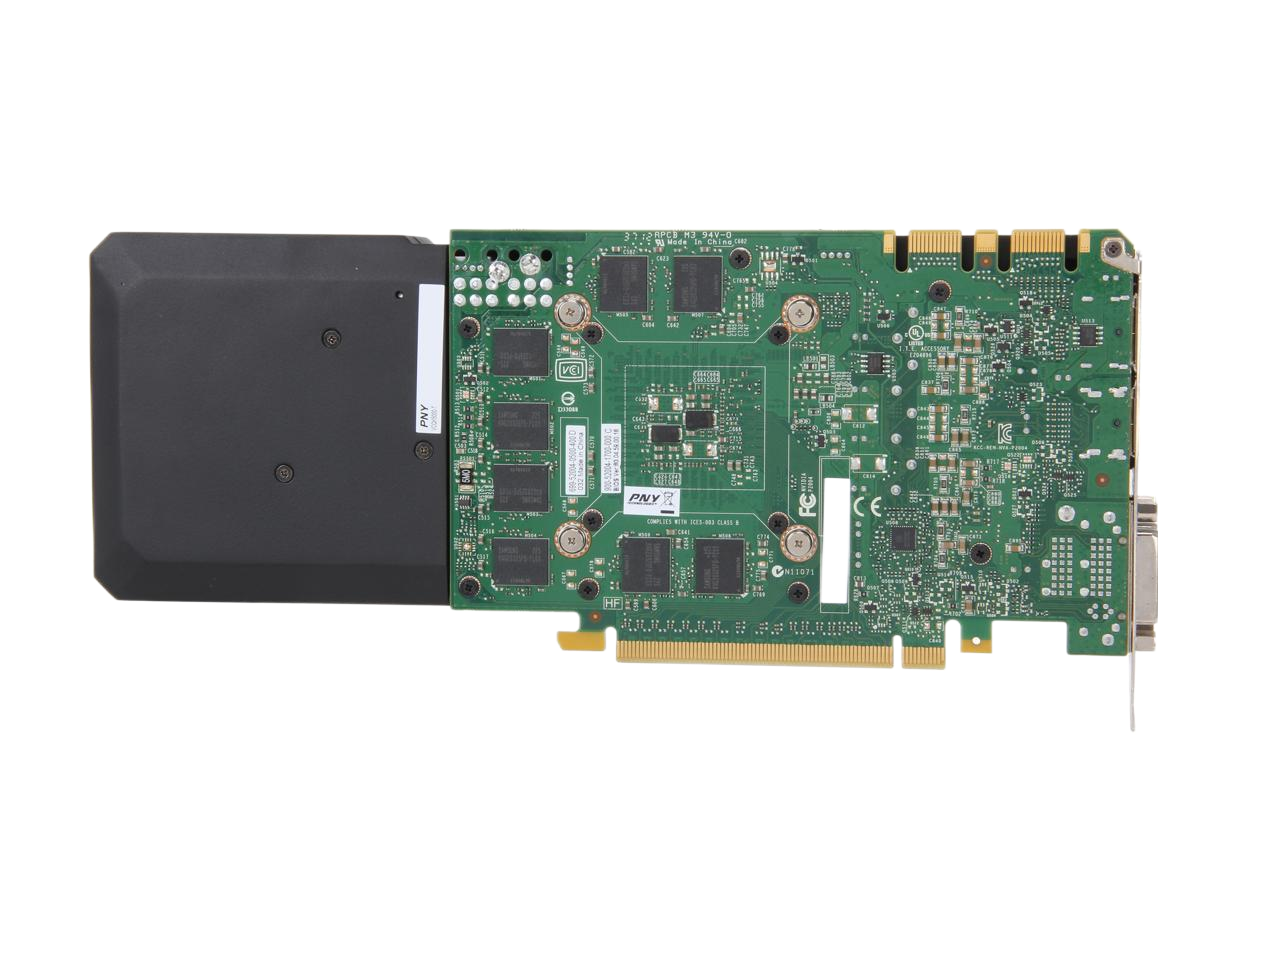 PNY NVIDIA Quadro K5000 4GB 256-bit PCI Express 2.0 x 16 HDCP Ready Workstation Video Card VCQK5000-PB